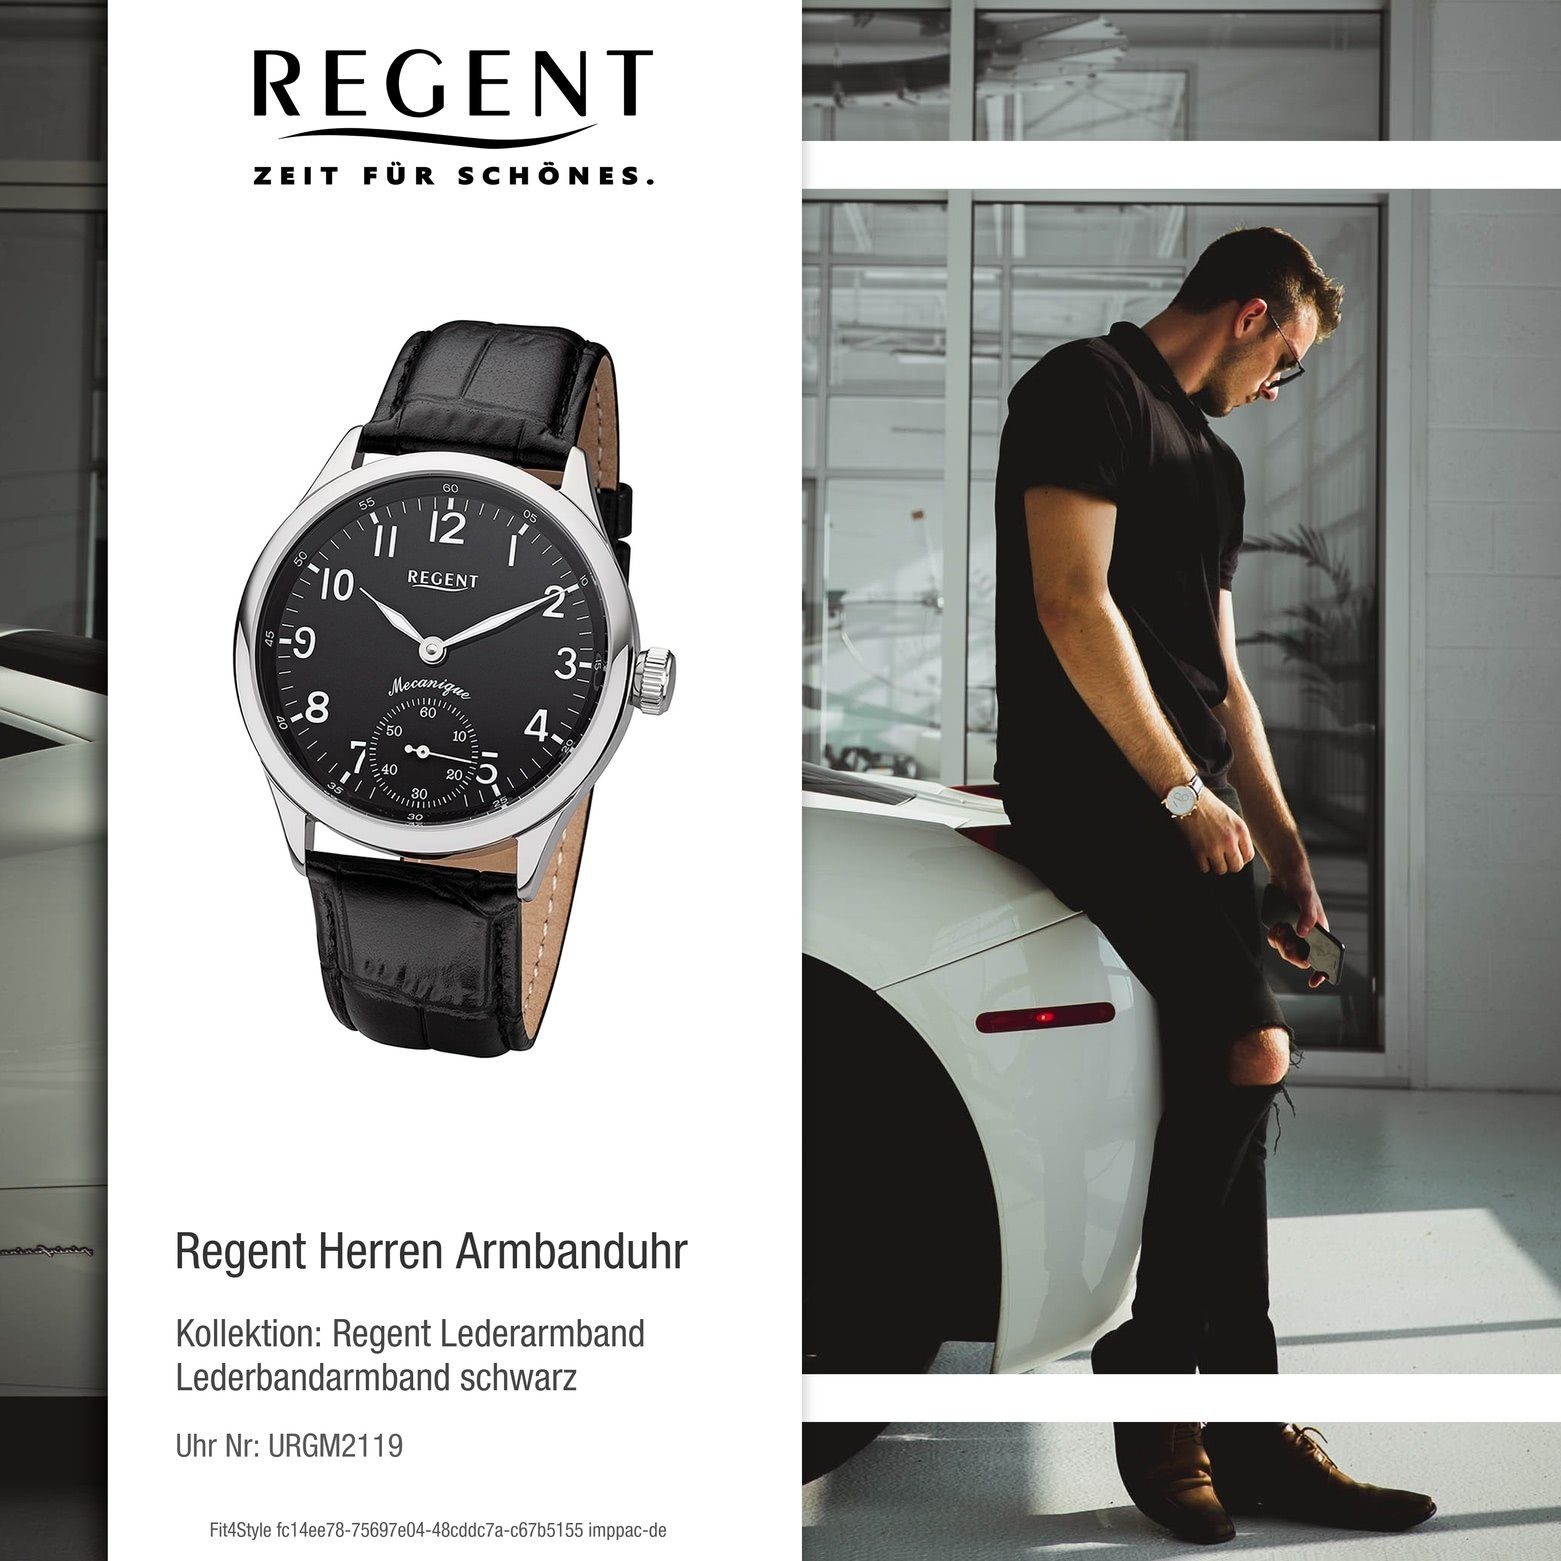 42,5mm), Regent groß Analoganzeige, rund, Armbanduhr Herren Quarzuhr Armbanduhr Lederbandarmband Herren (ca. Regent